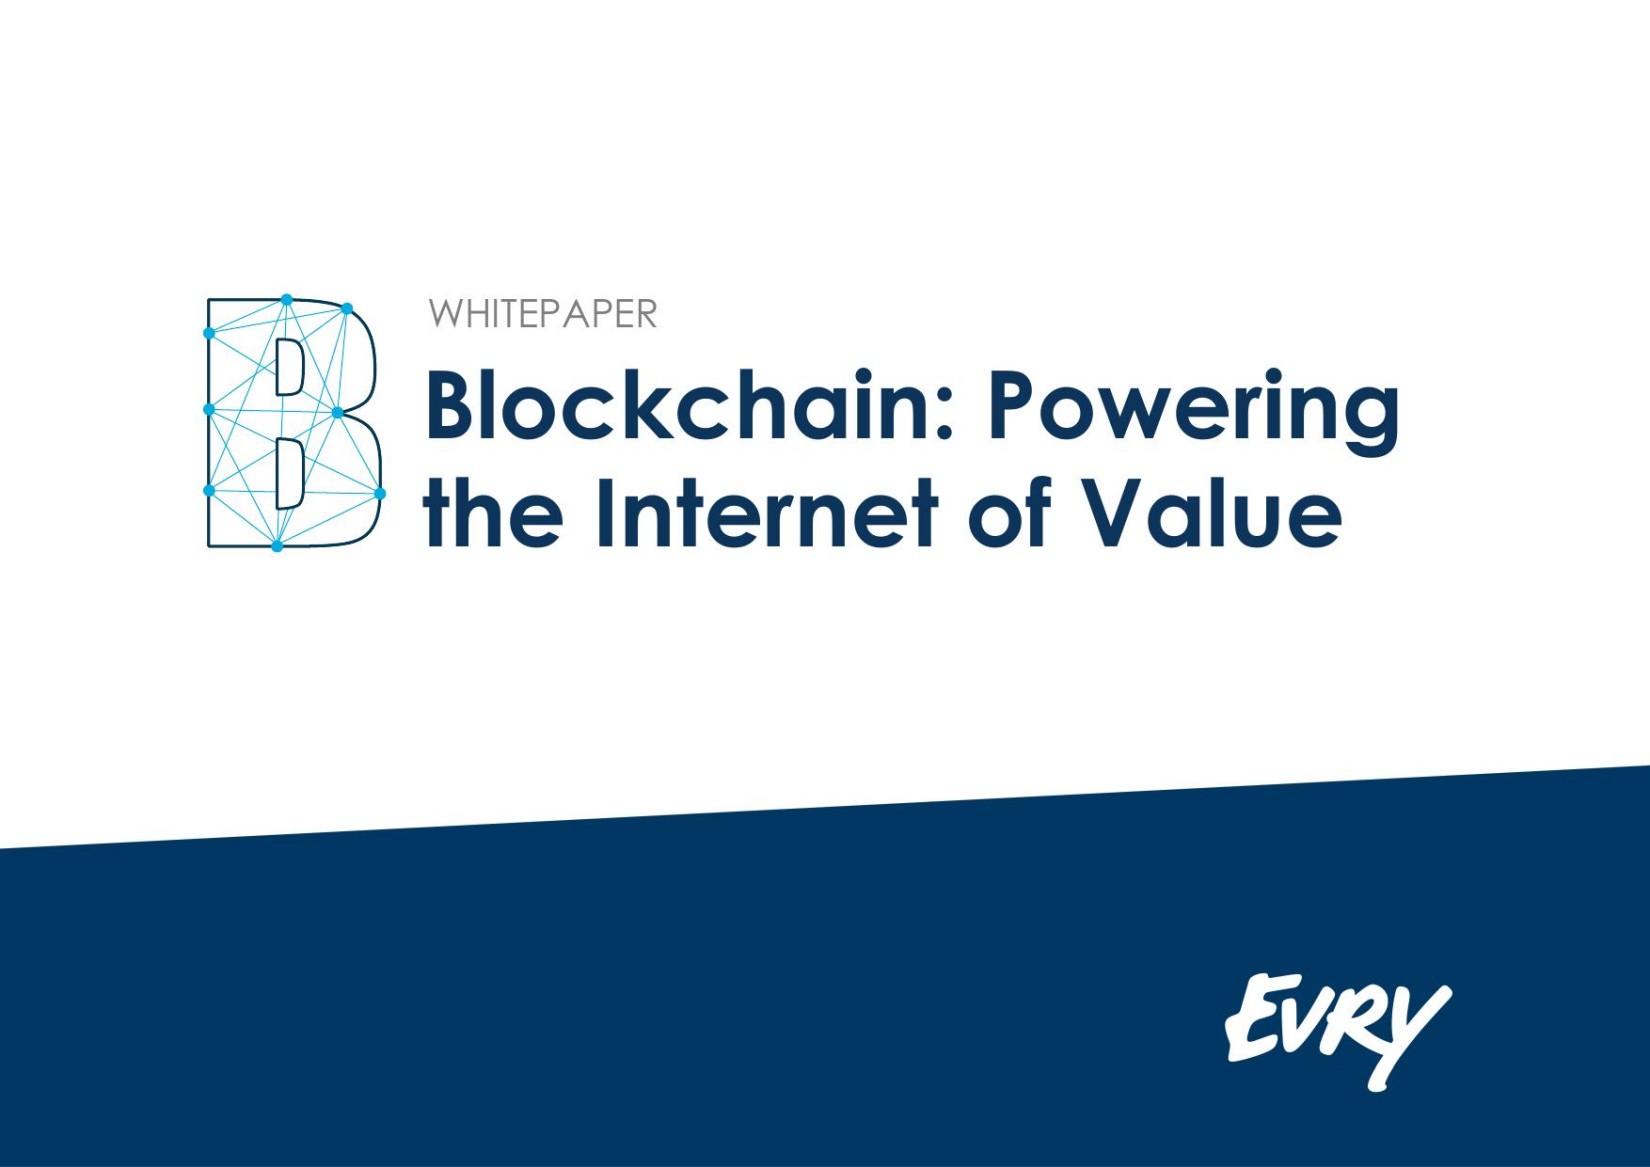 WHITEPAPER Blockchain Powering the Internet of Value  2016